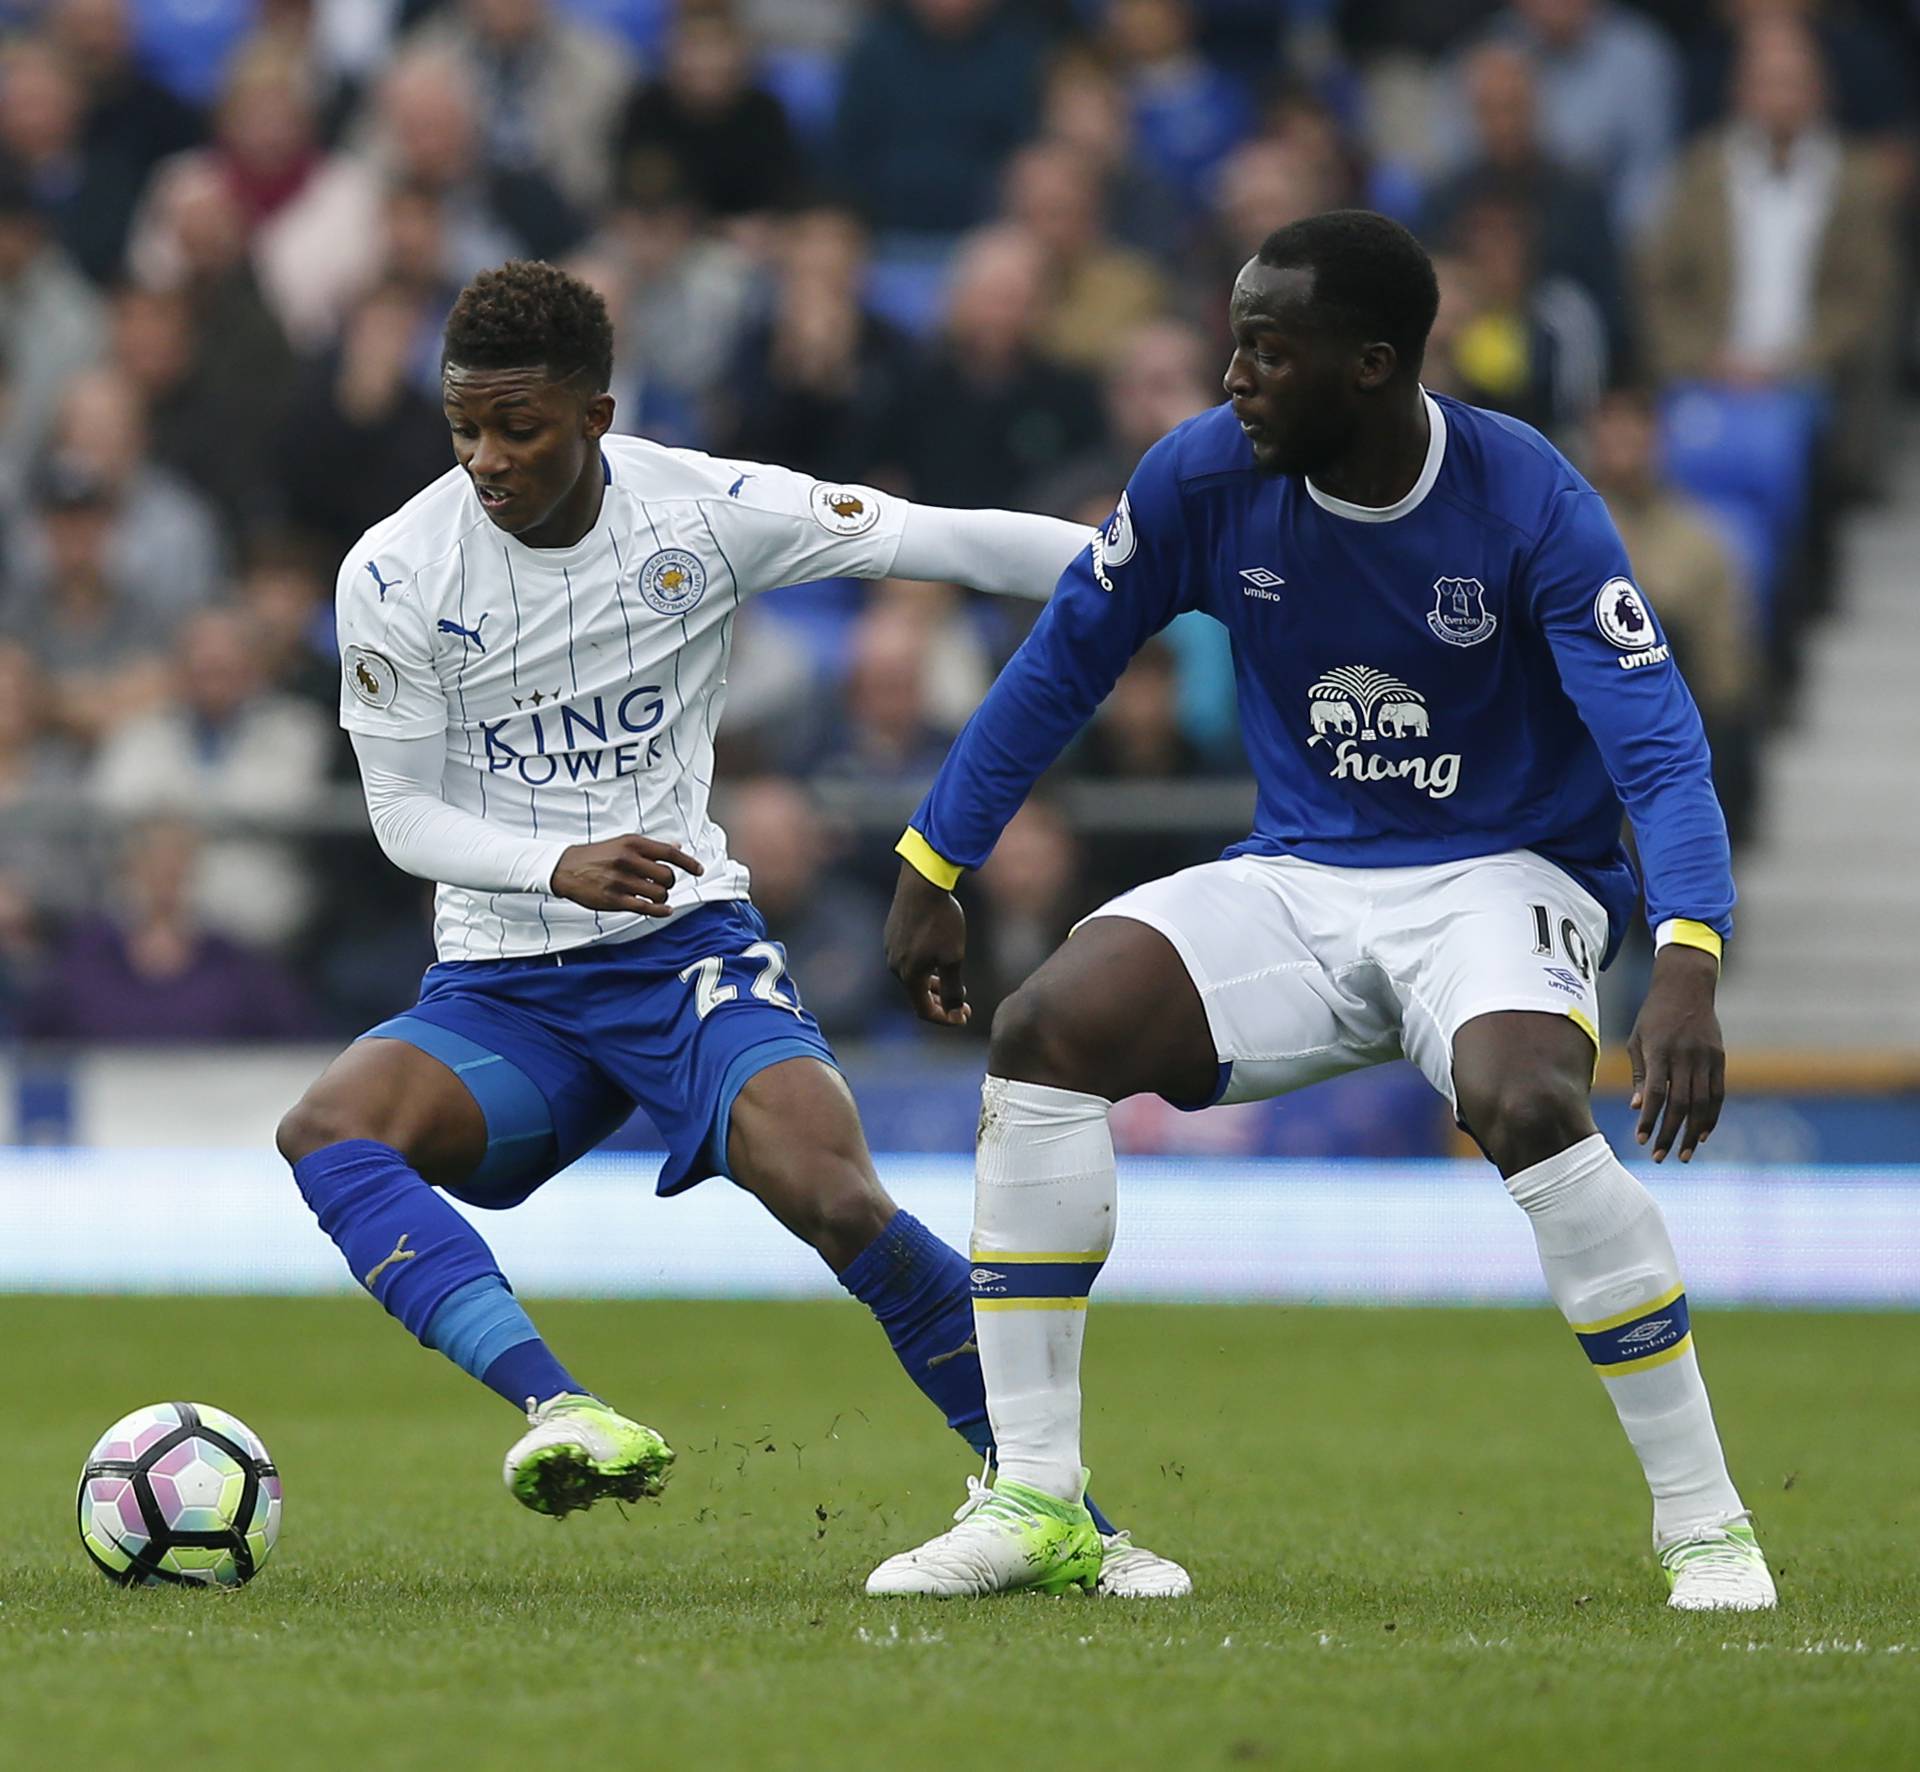 Leicester City's Demarai Gray in action with Everton's Idrissa Gueye and Romelu Lukaku